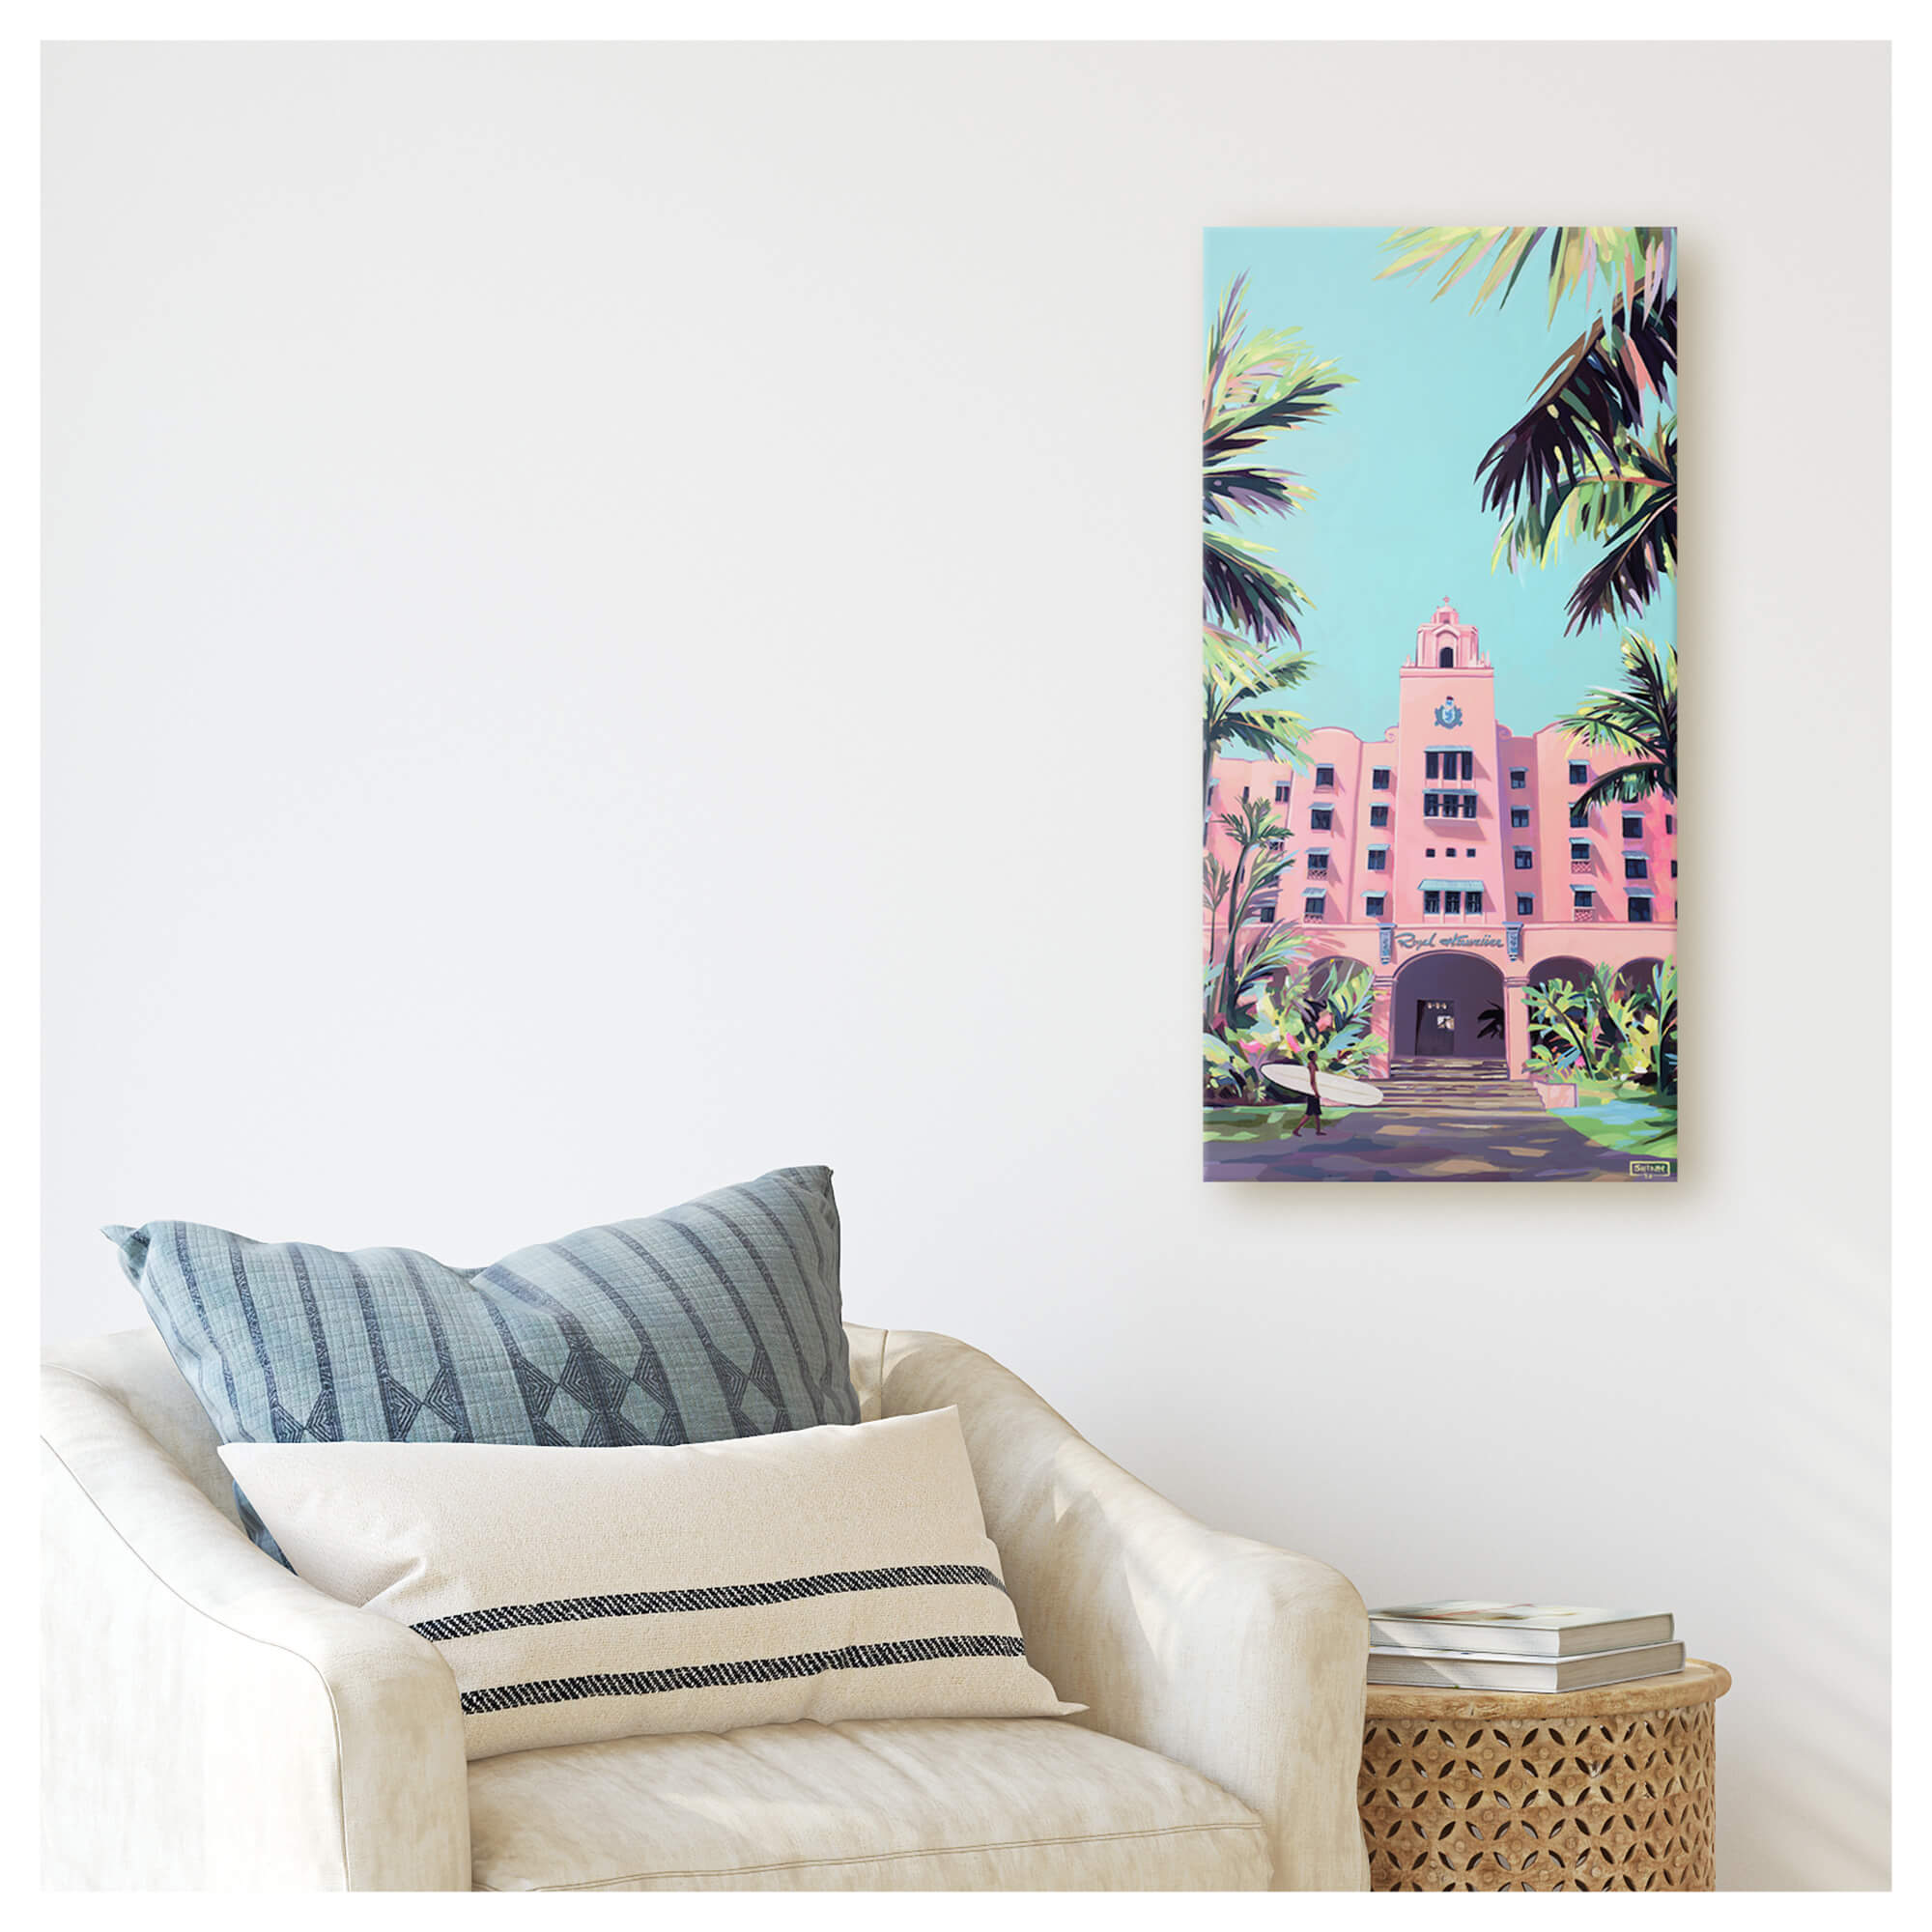 A canvas giclée art print of the famed pink Royal Hawaiian Hotel in Waikiki by Hawaii artist Christie Shinn